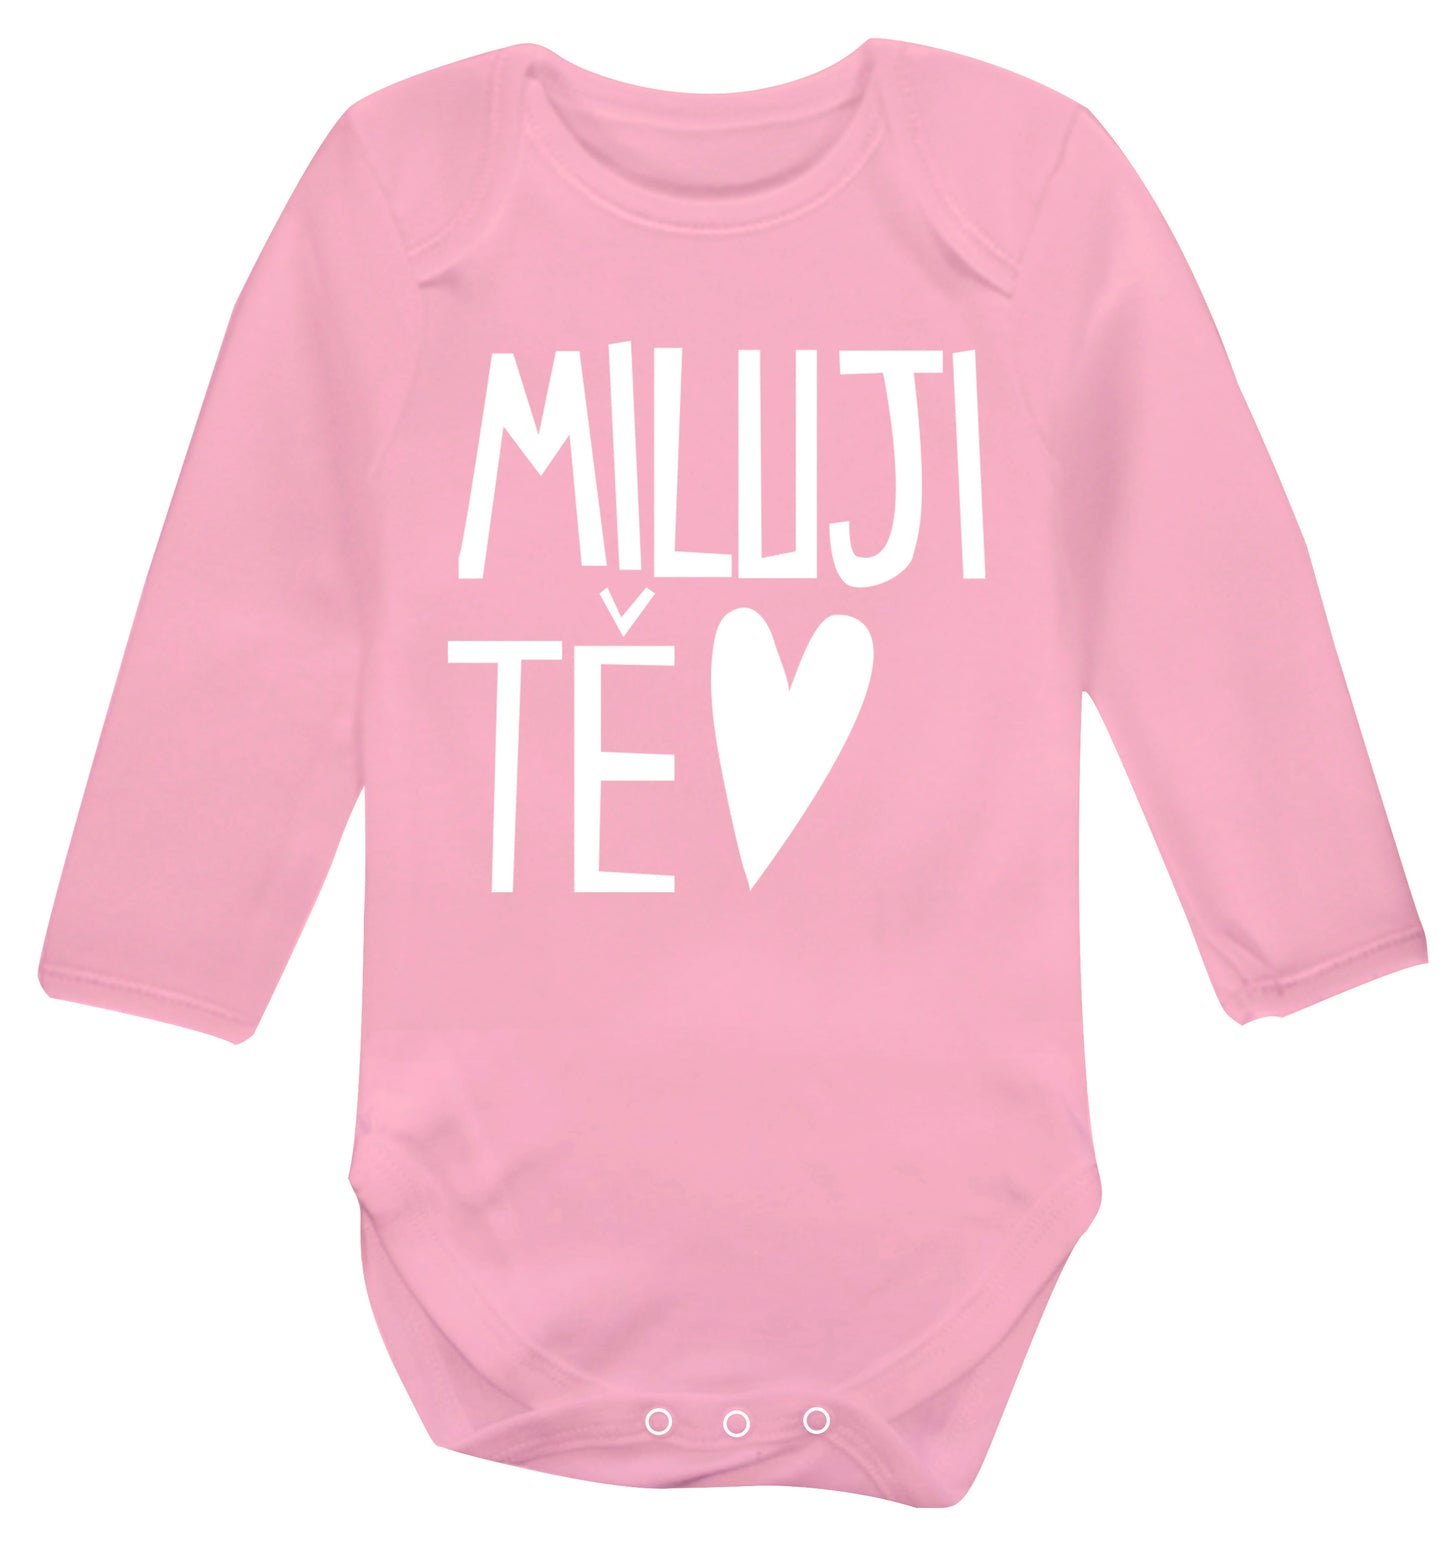 Miluji T_ - I love you Baby Vest long sleeved pale pink 6-12 months